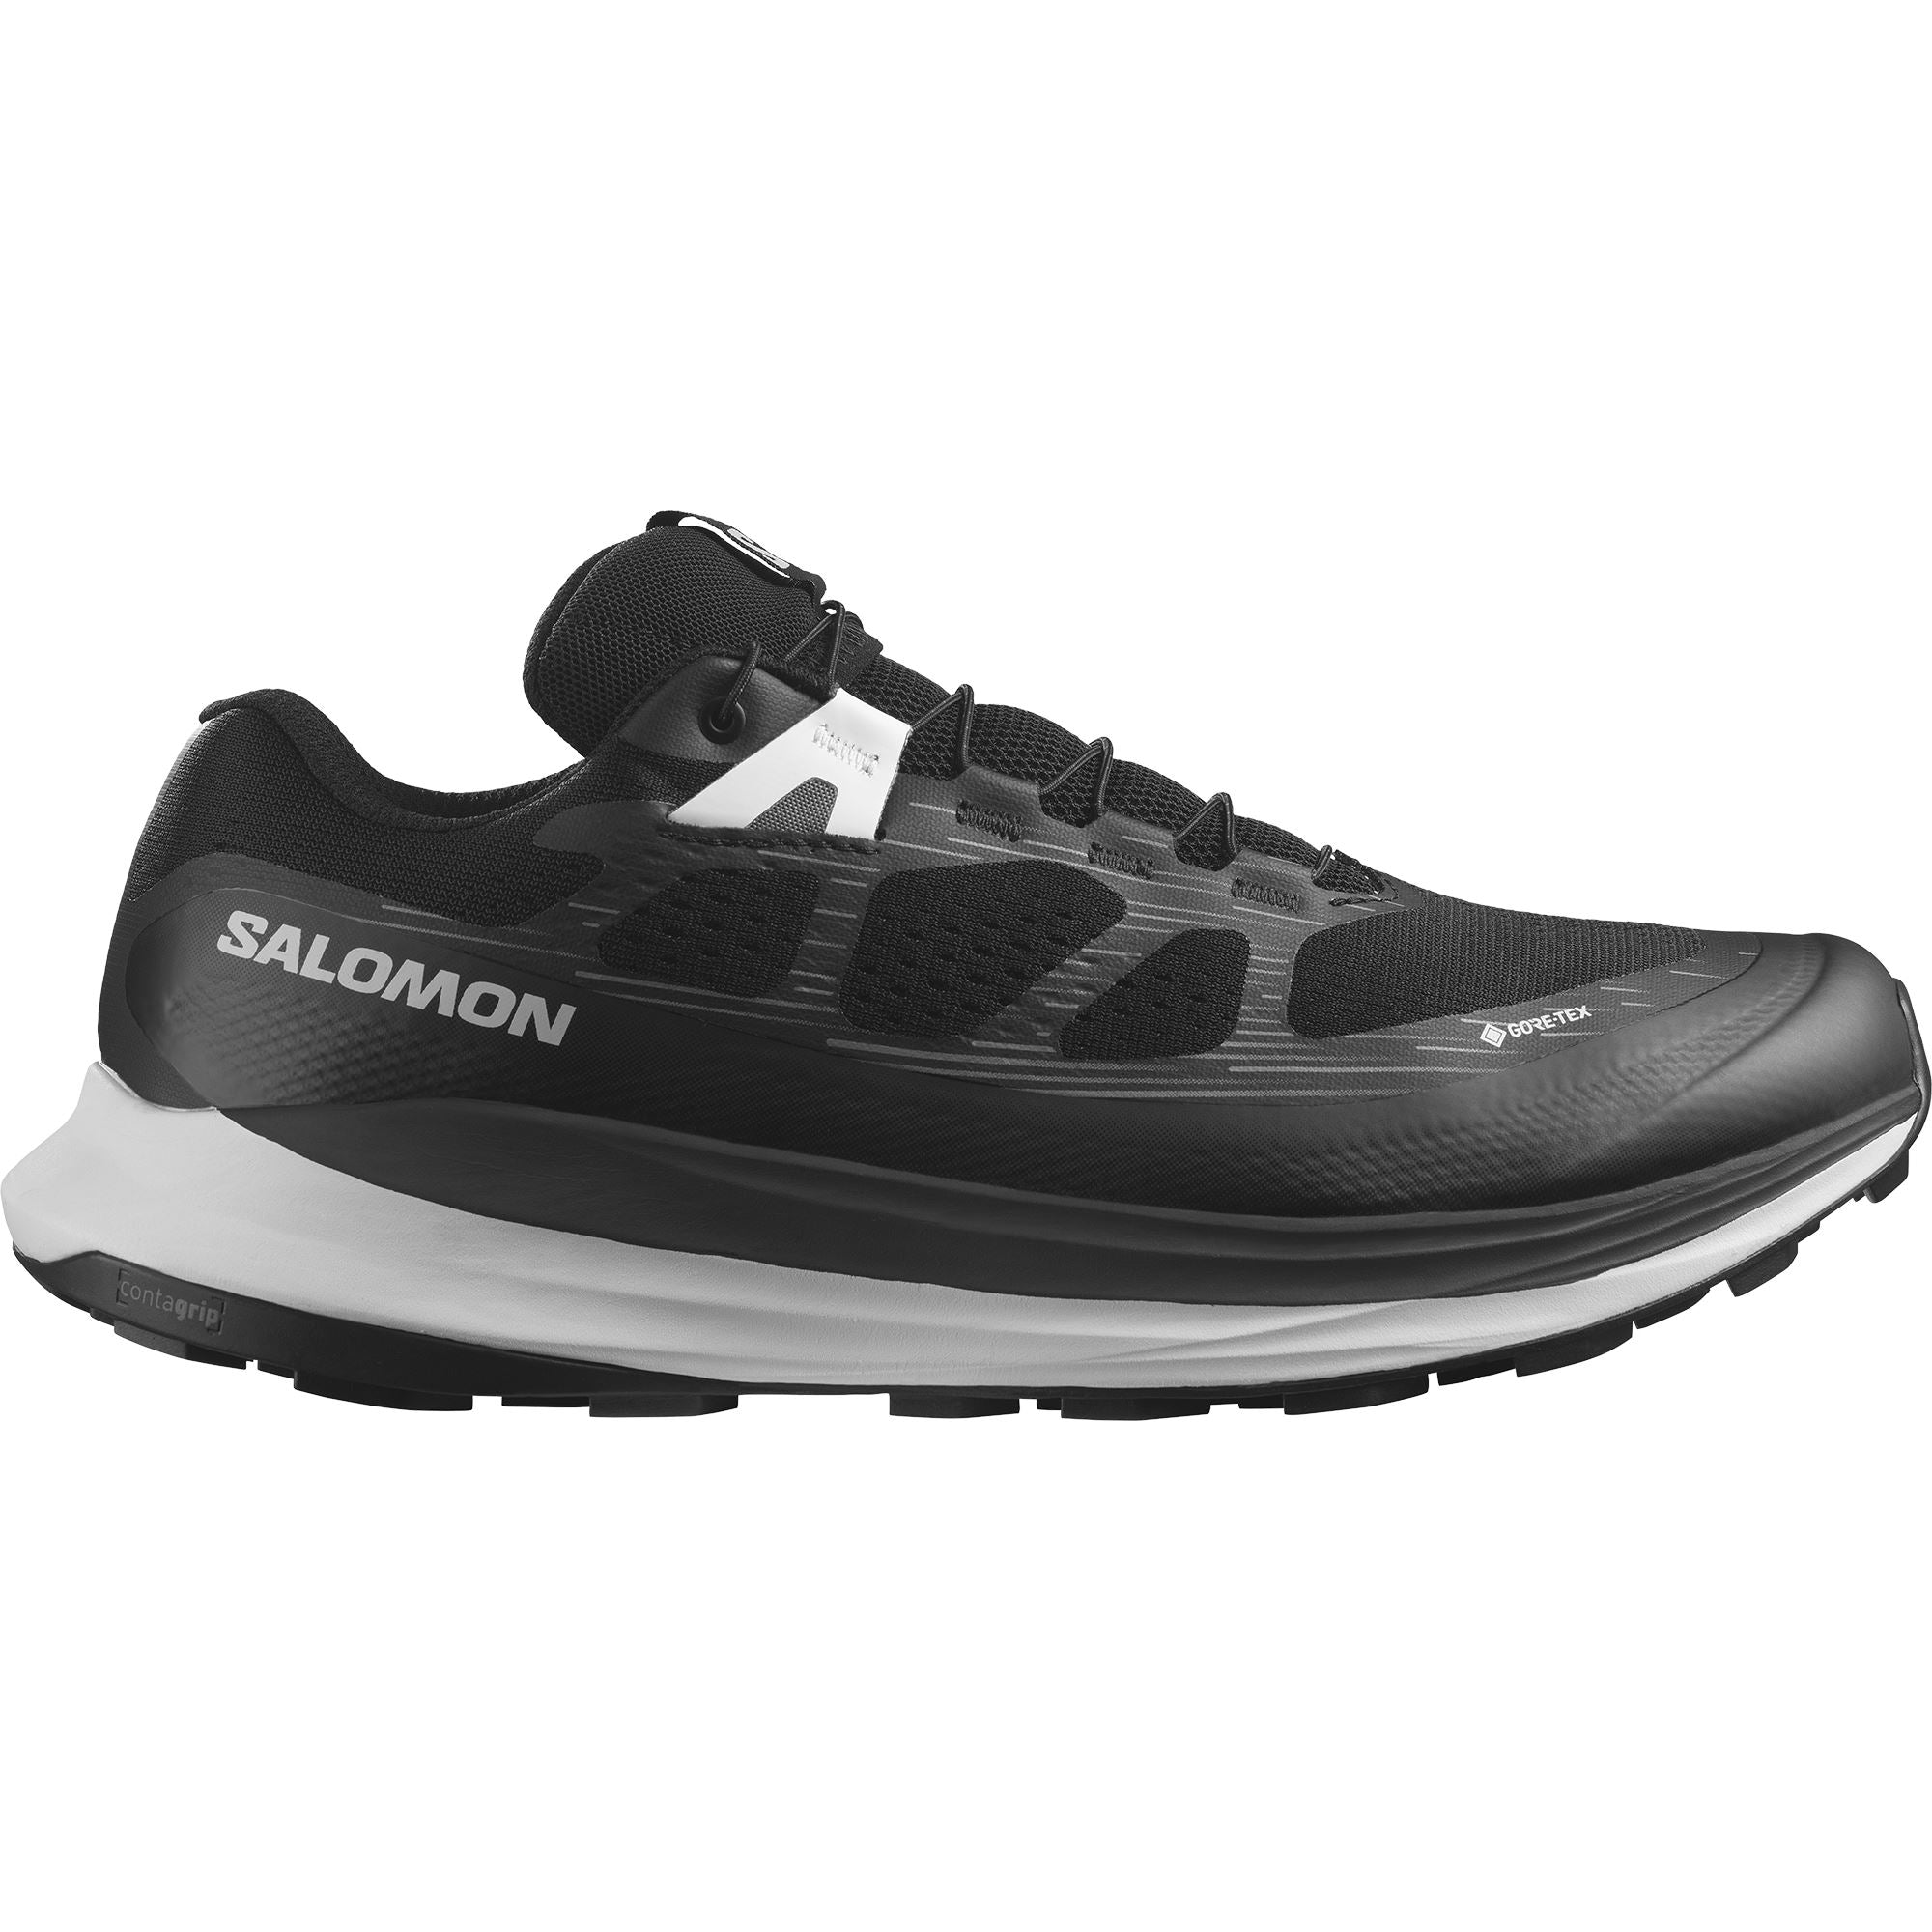 Salomon Ultra Glide 2 GTX Men's Trail Running Shoes Black / Lunar Rock / White US 8.5 